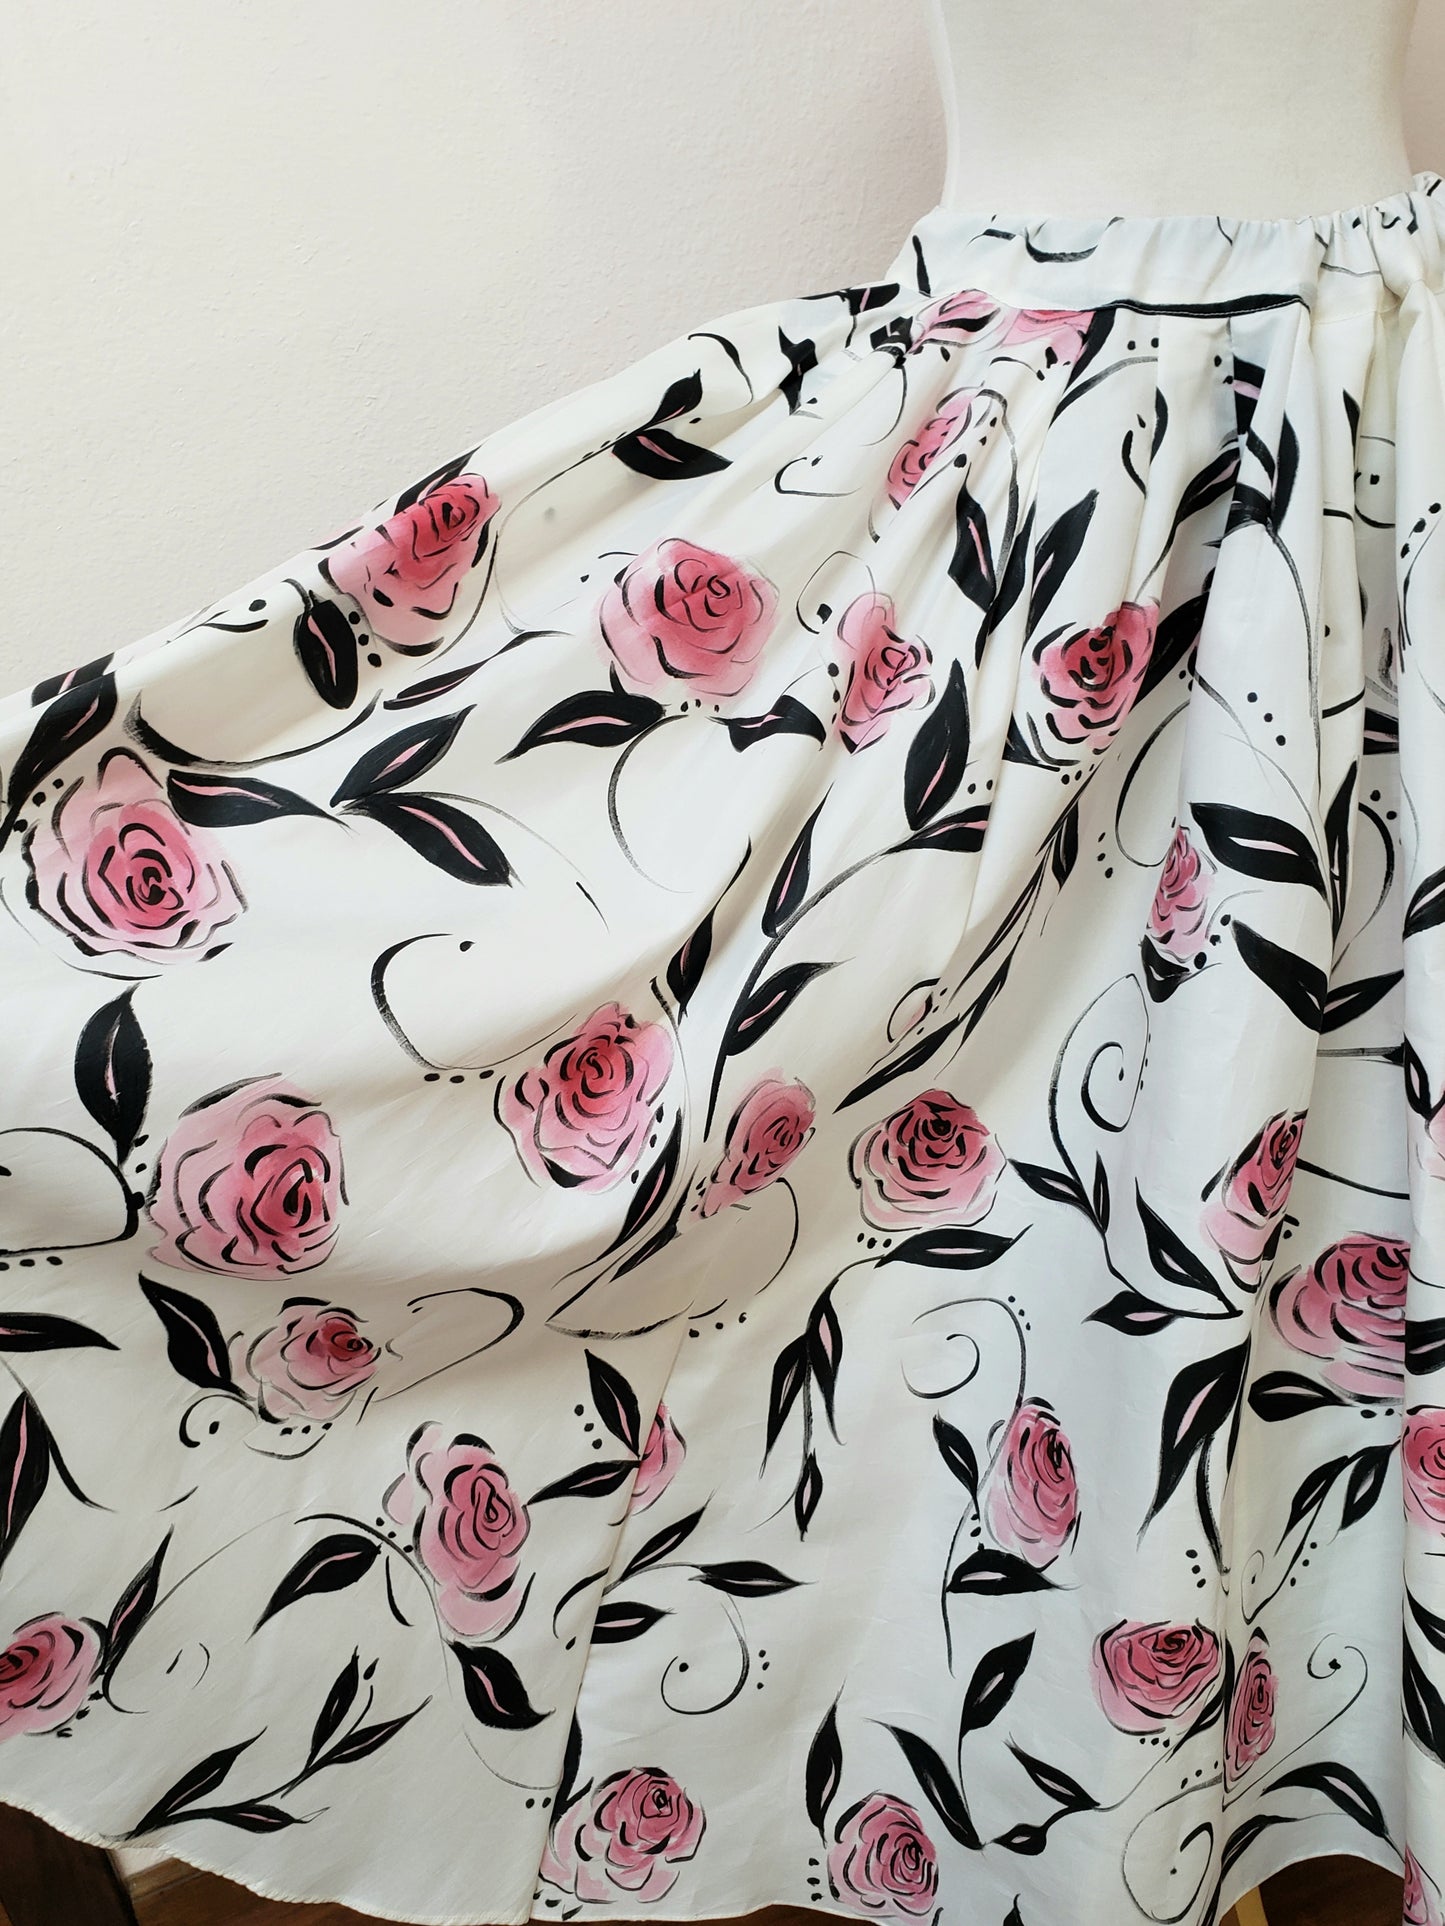 Handpainted floral skirt